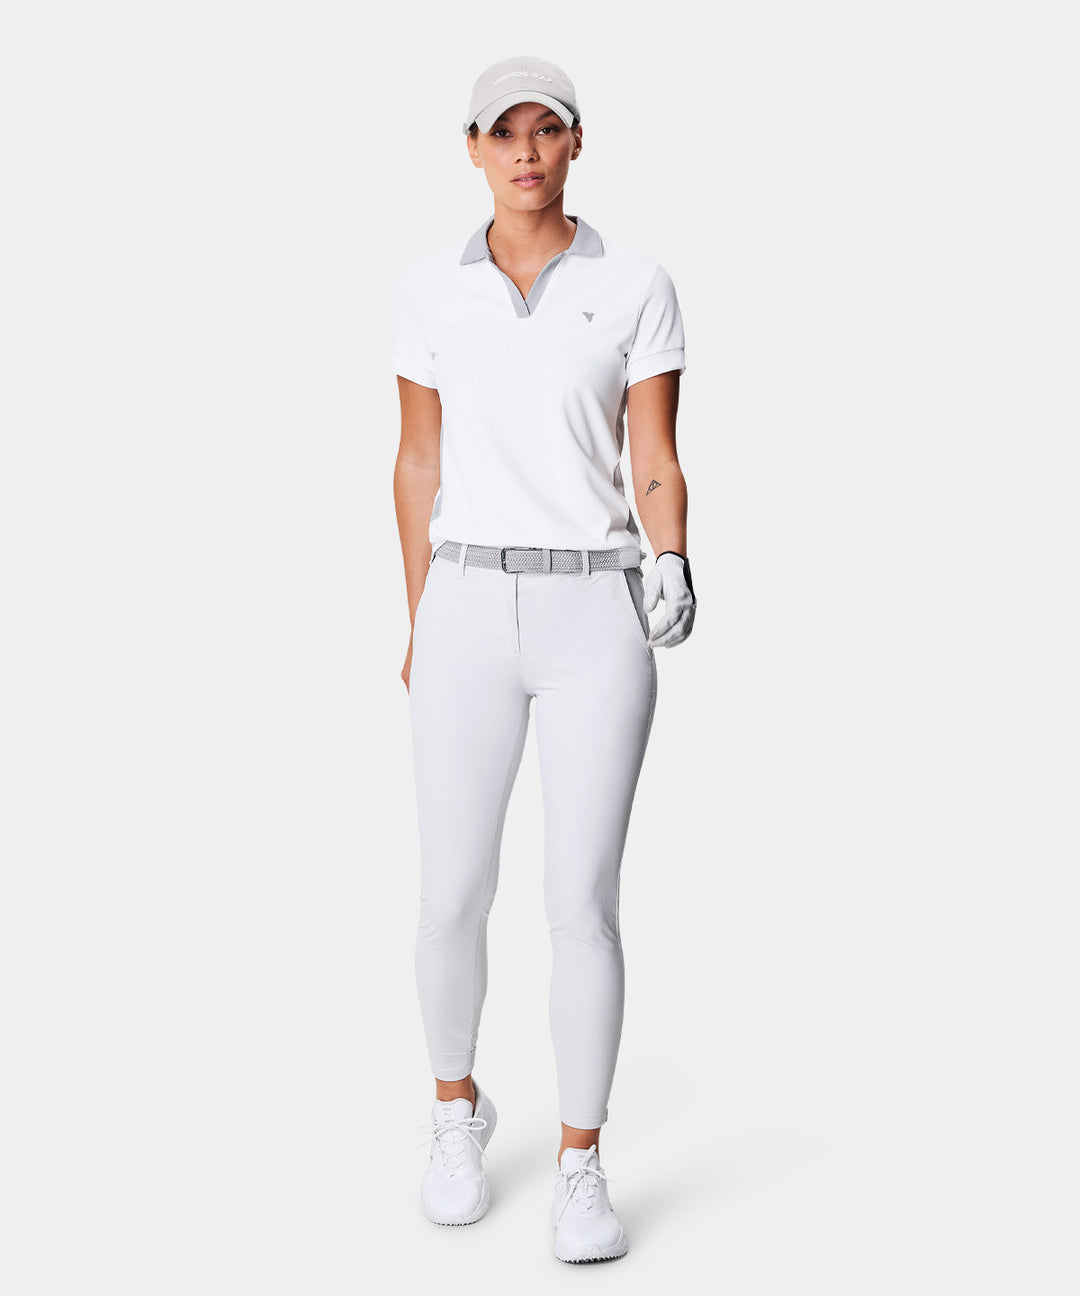 Tori White Polo Shirt Macade Golf